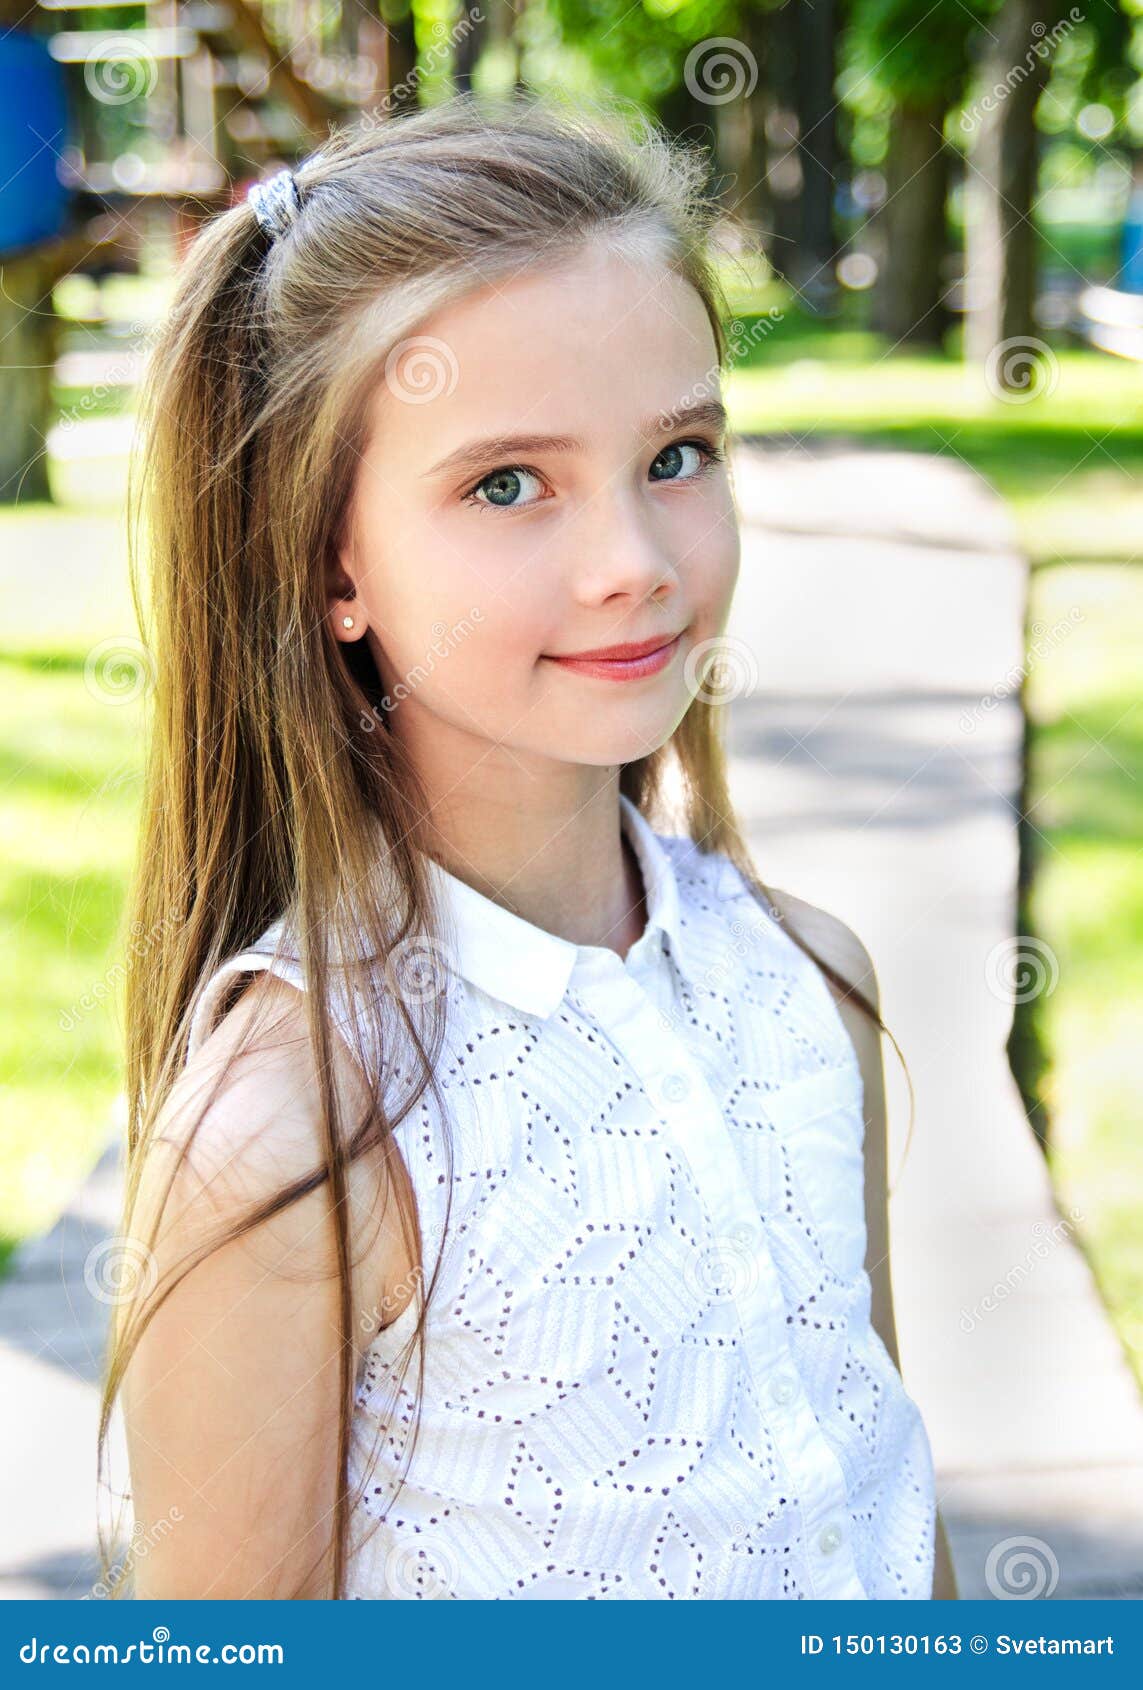 Portrait of Adorable Smiling Little Girl Child Schoolgirl Teenager ...